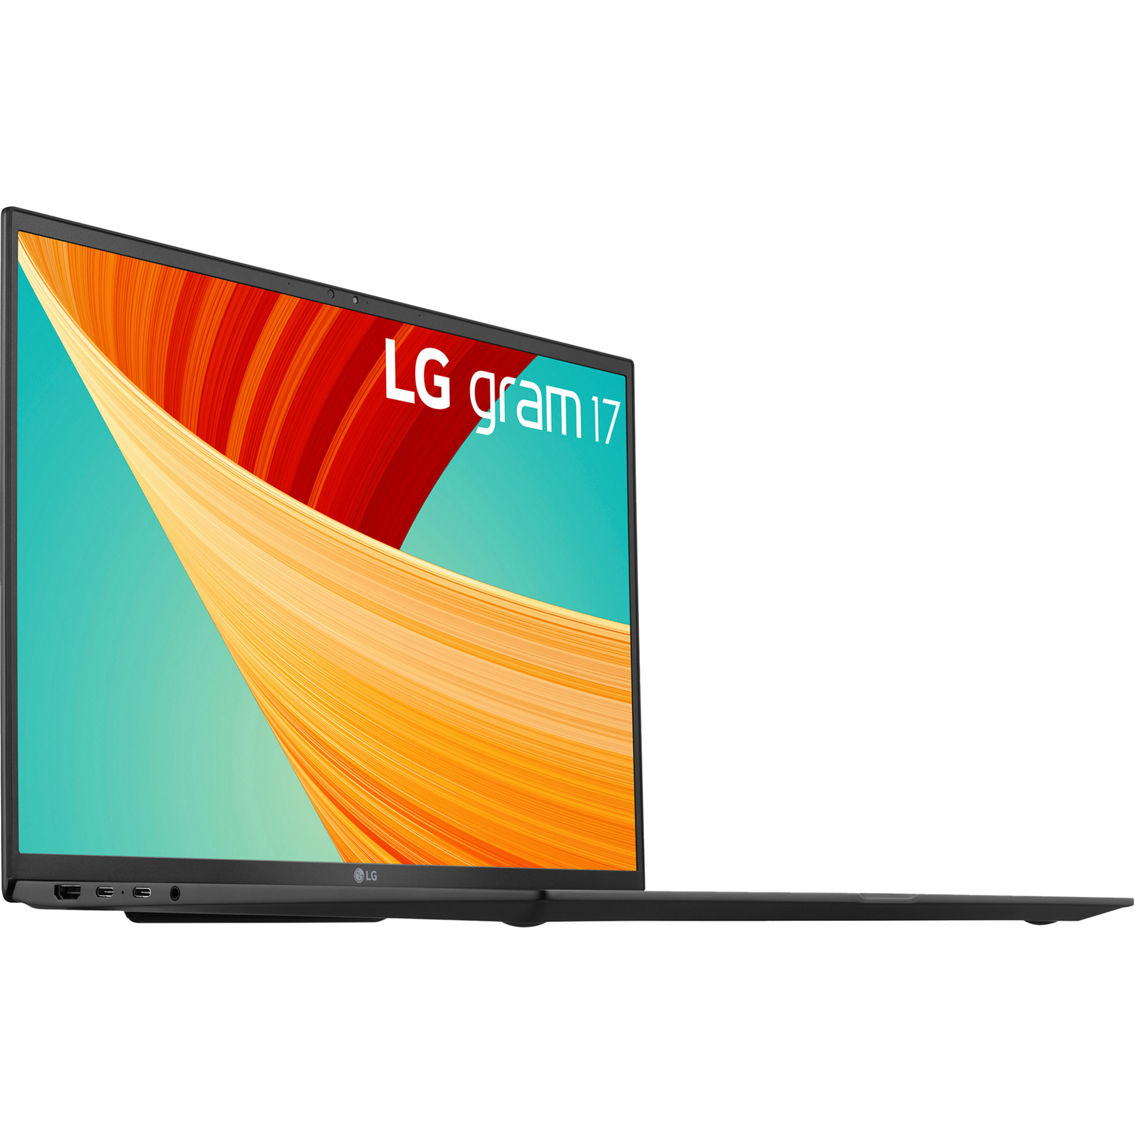 LG gram 17 in. Intel Evo Core i7 2.2GHz 16GB RAM 1TB SSD Laptop - Image 3 of 9